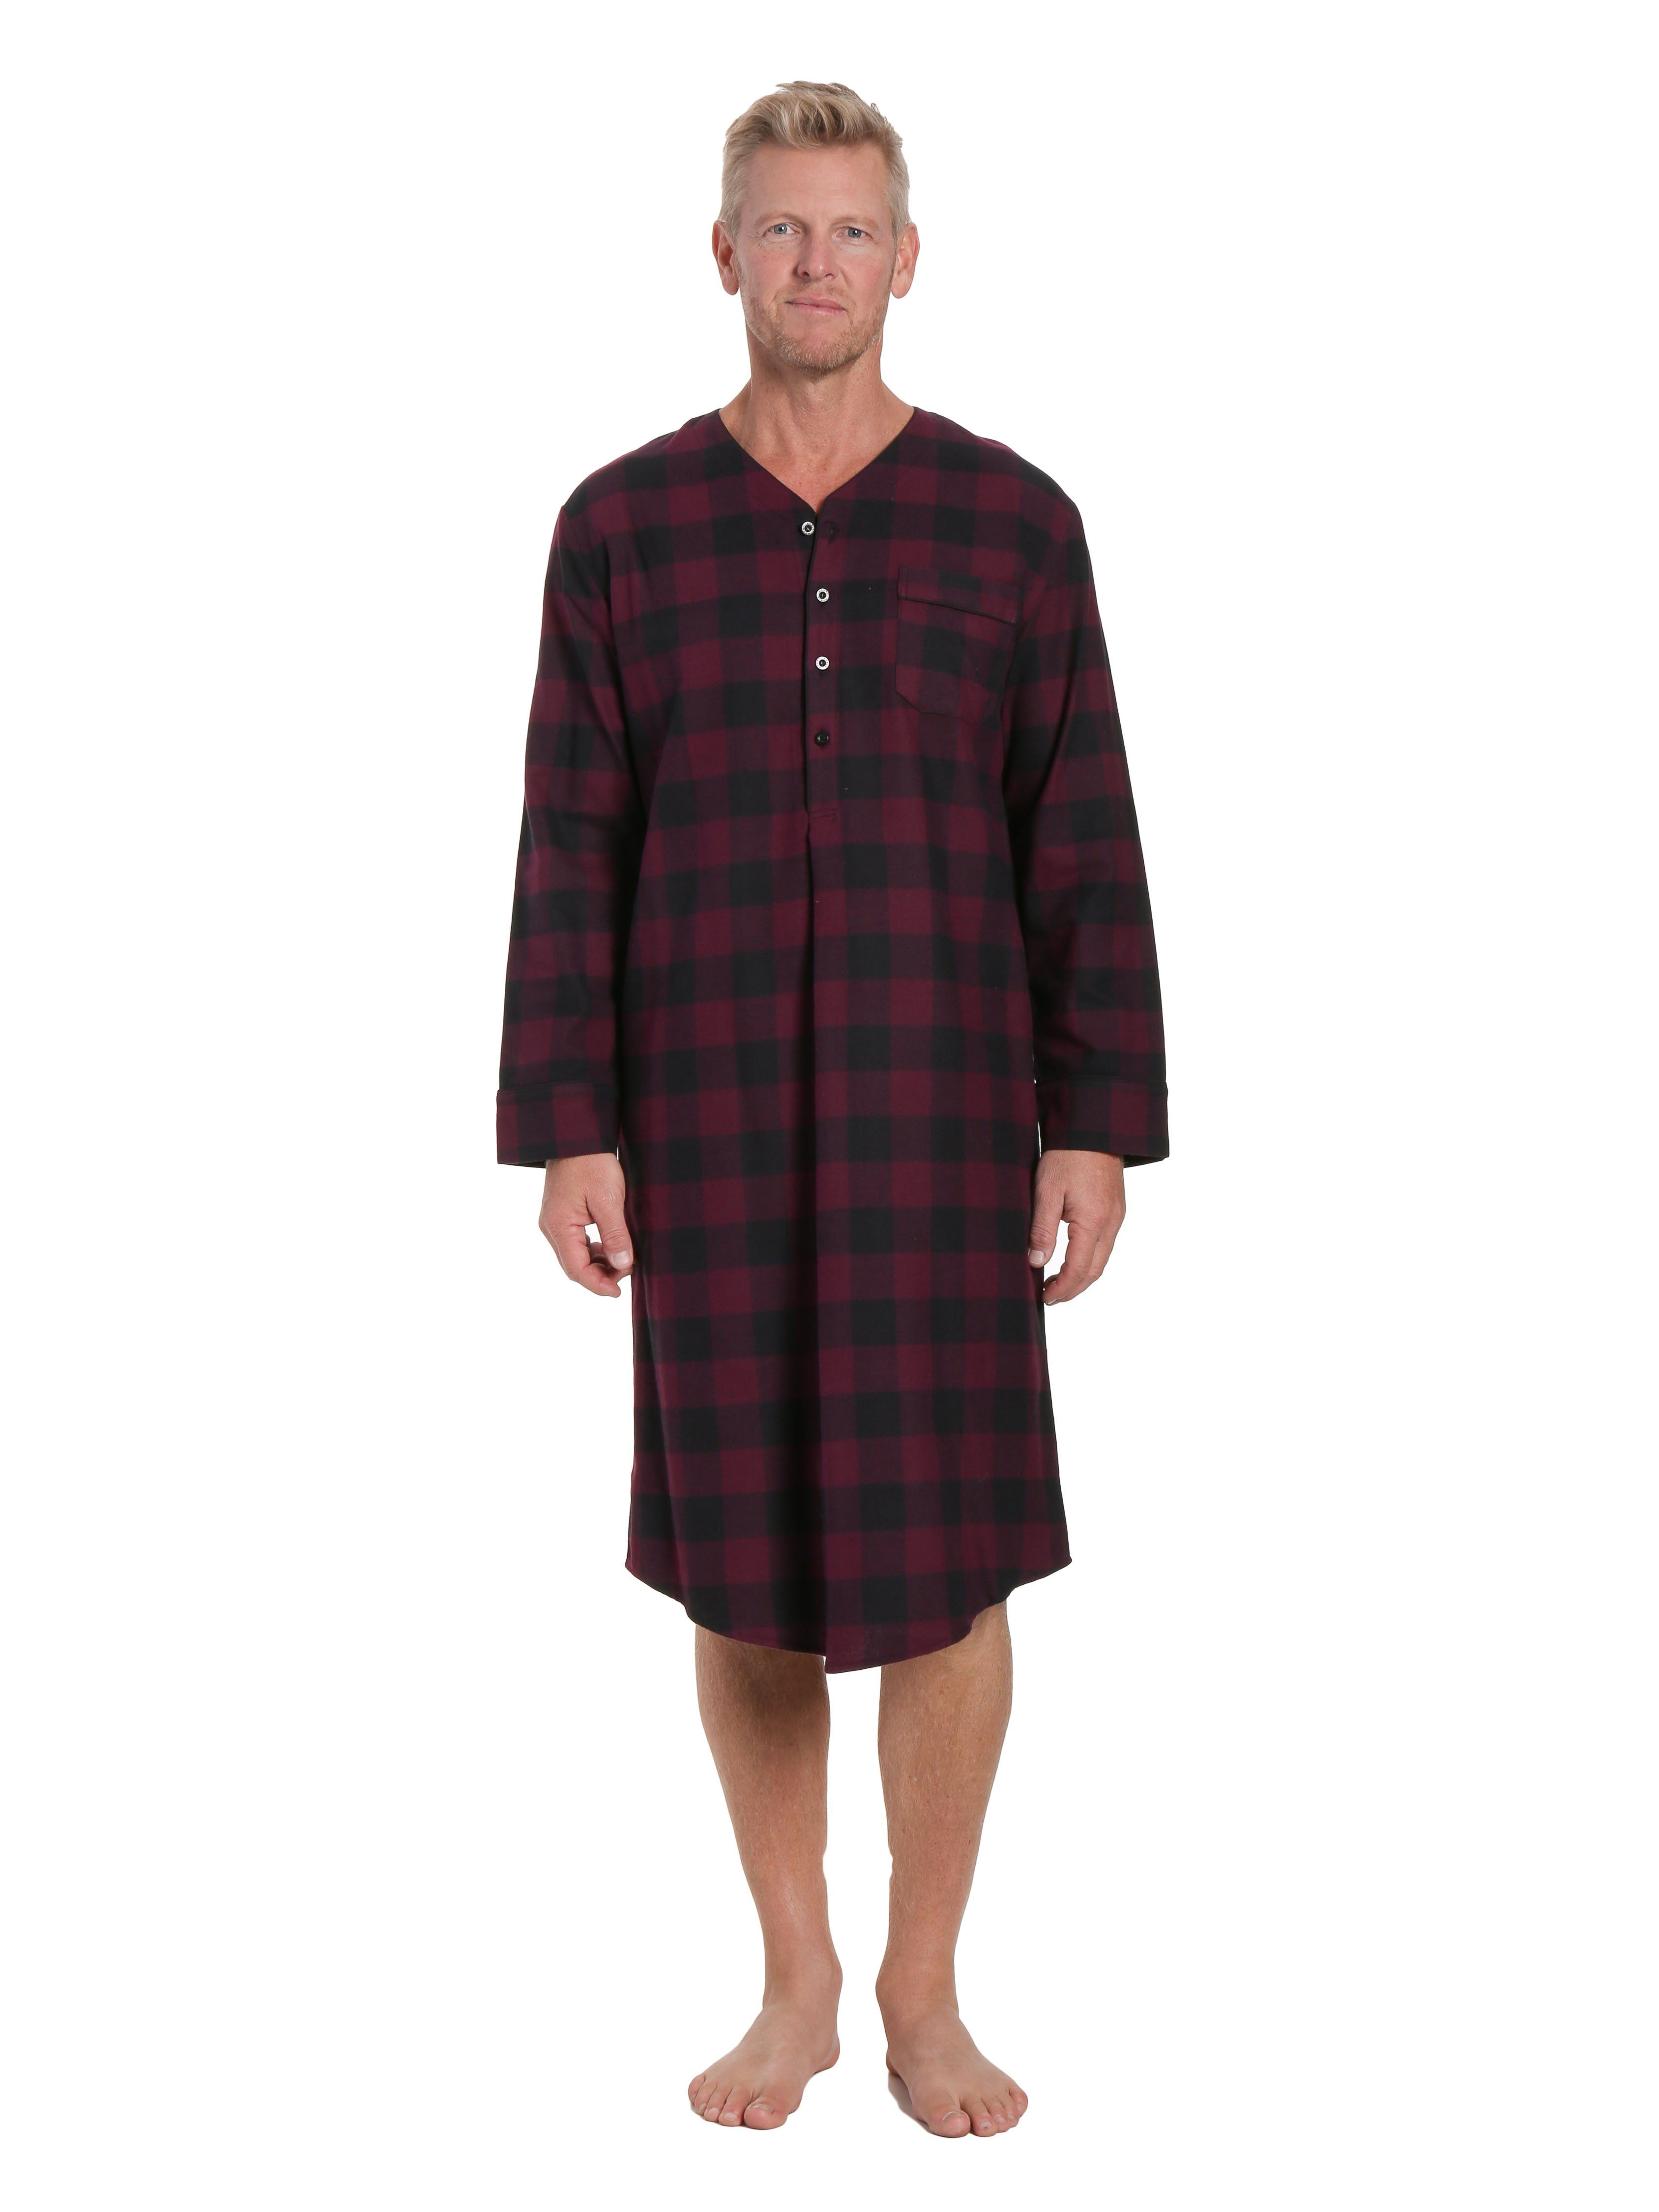 Mens Nightshirt - 100% Cotton Flannel Mens Nightshirts for Sleeping